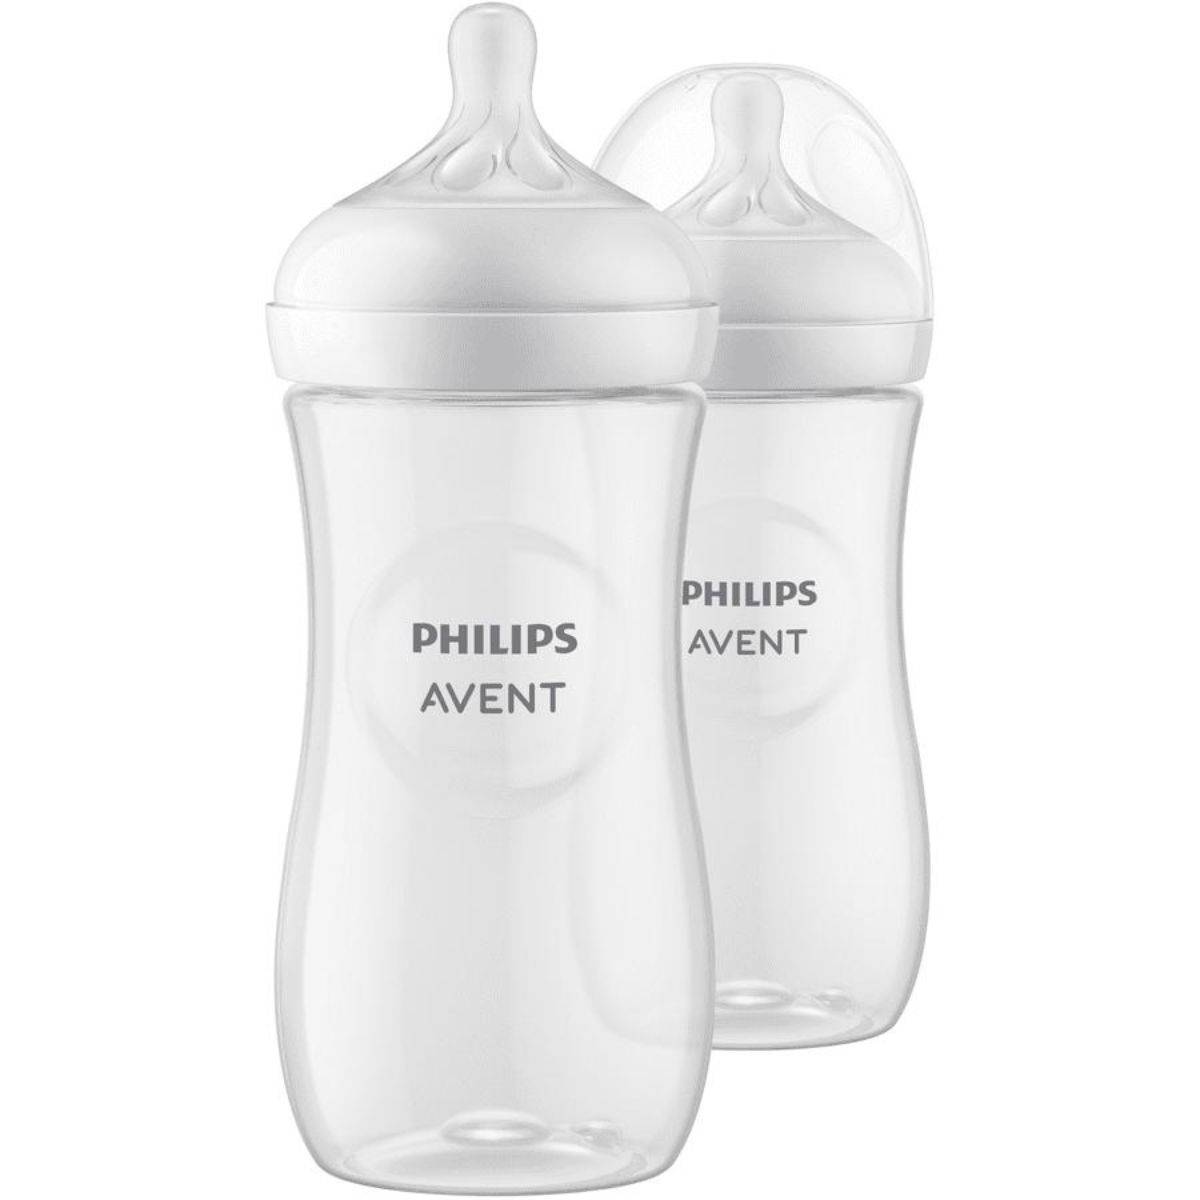 Philips Avent Chauffe-biberon de voyage